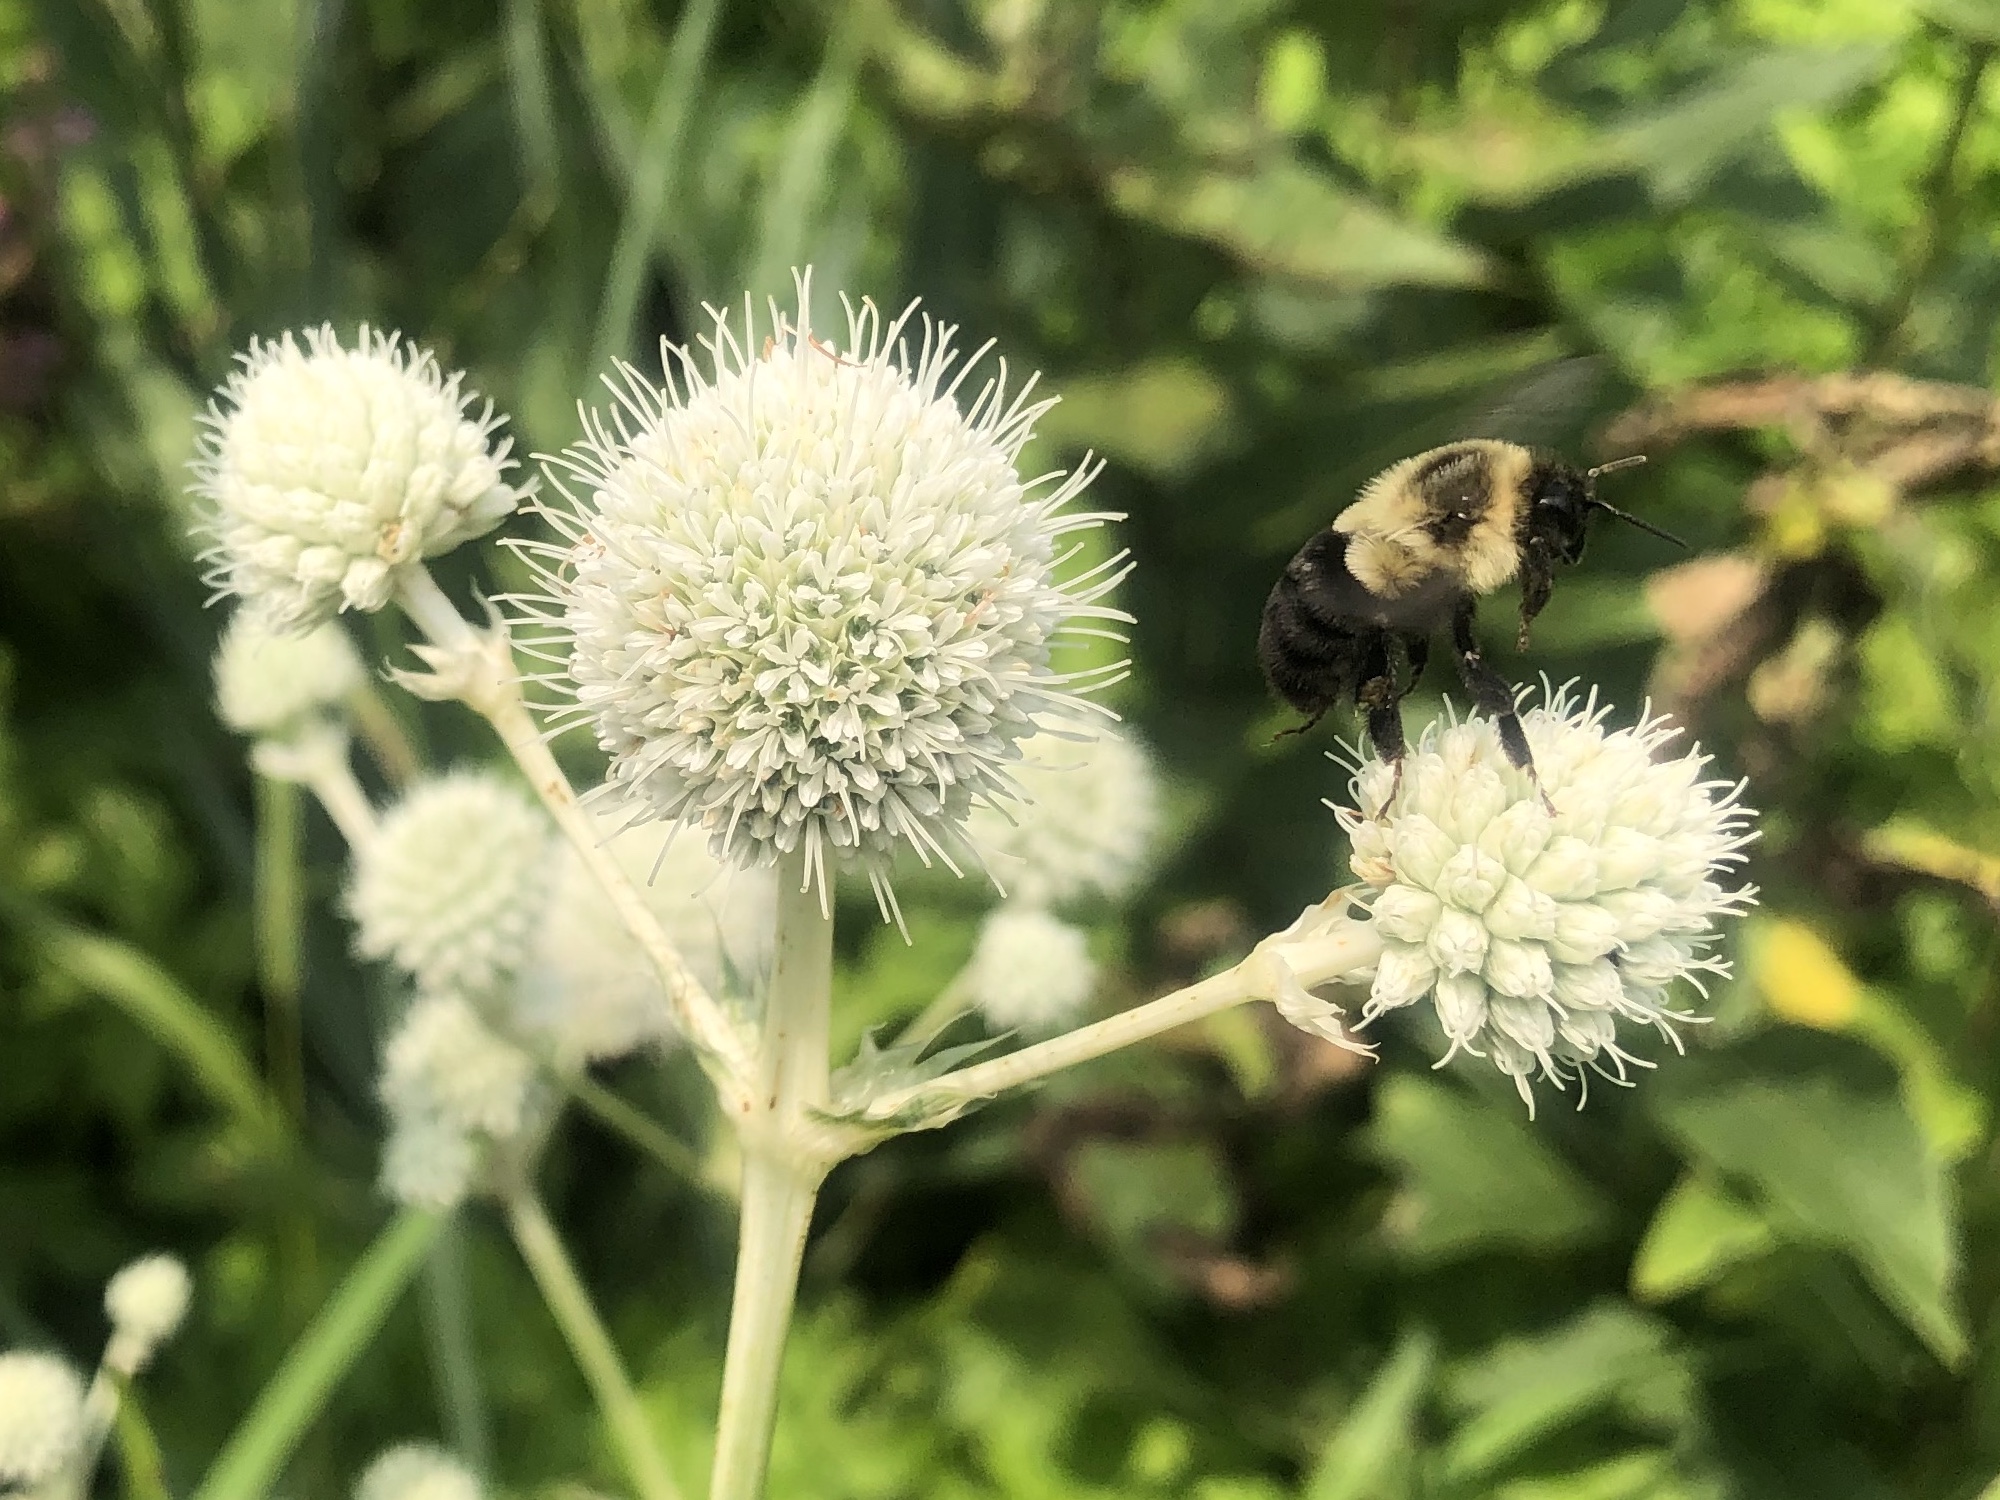 Bumblebee on Rattlesnake Master near UW Arboretum Visitor Center in Madison, Wisconsin on July 22, 2021.